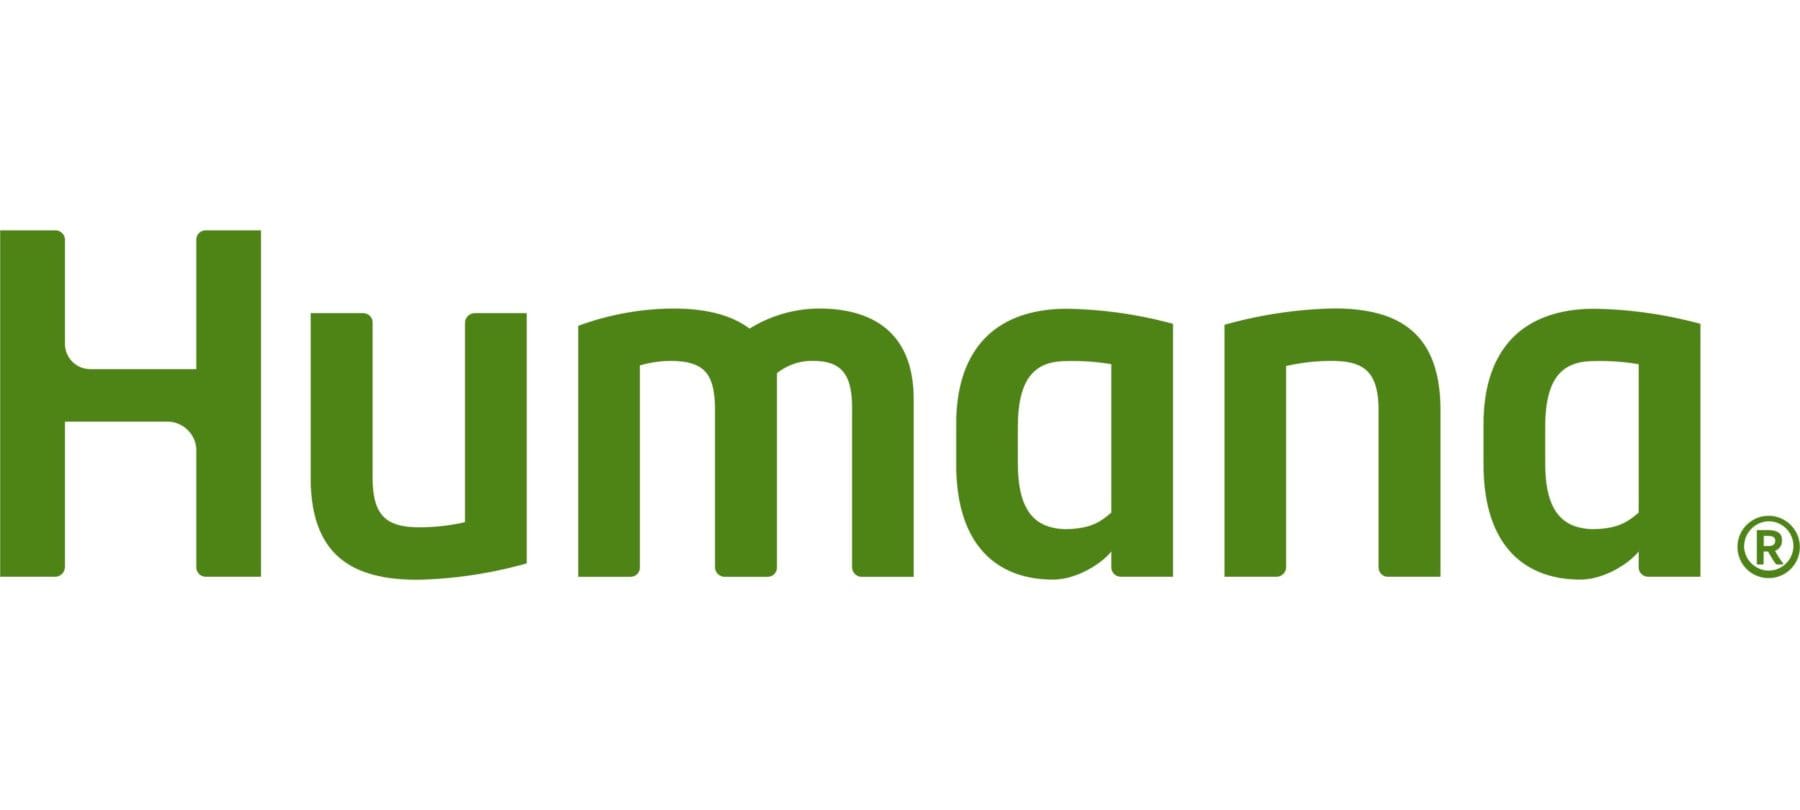 green Humana logo